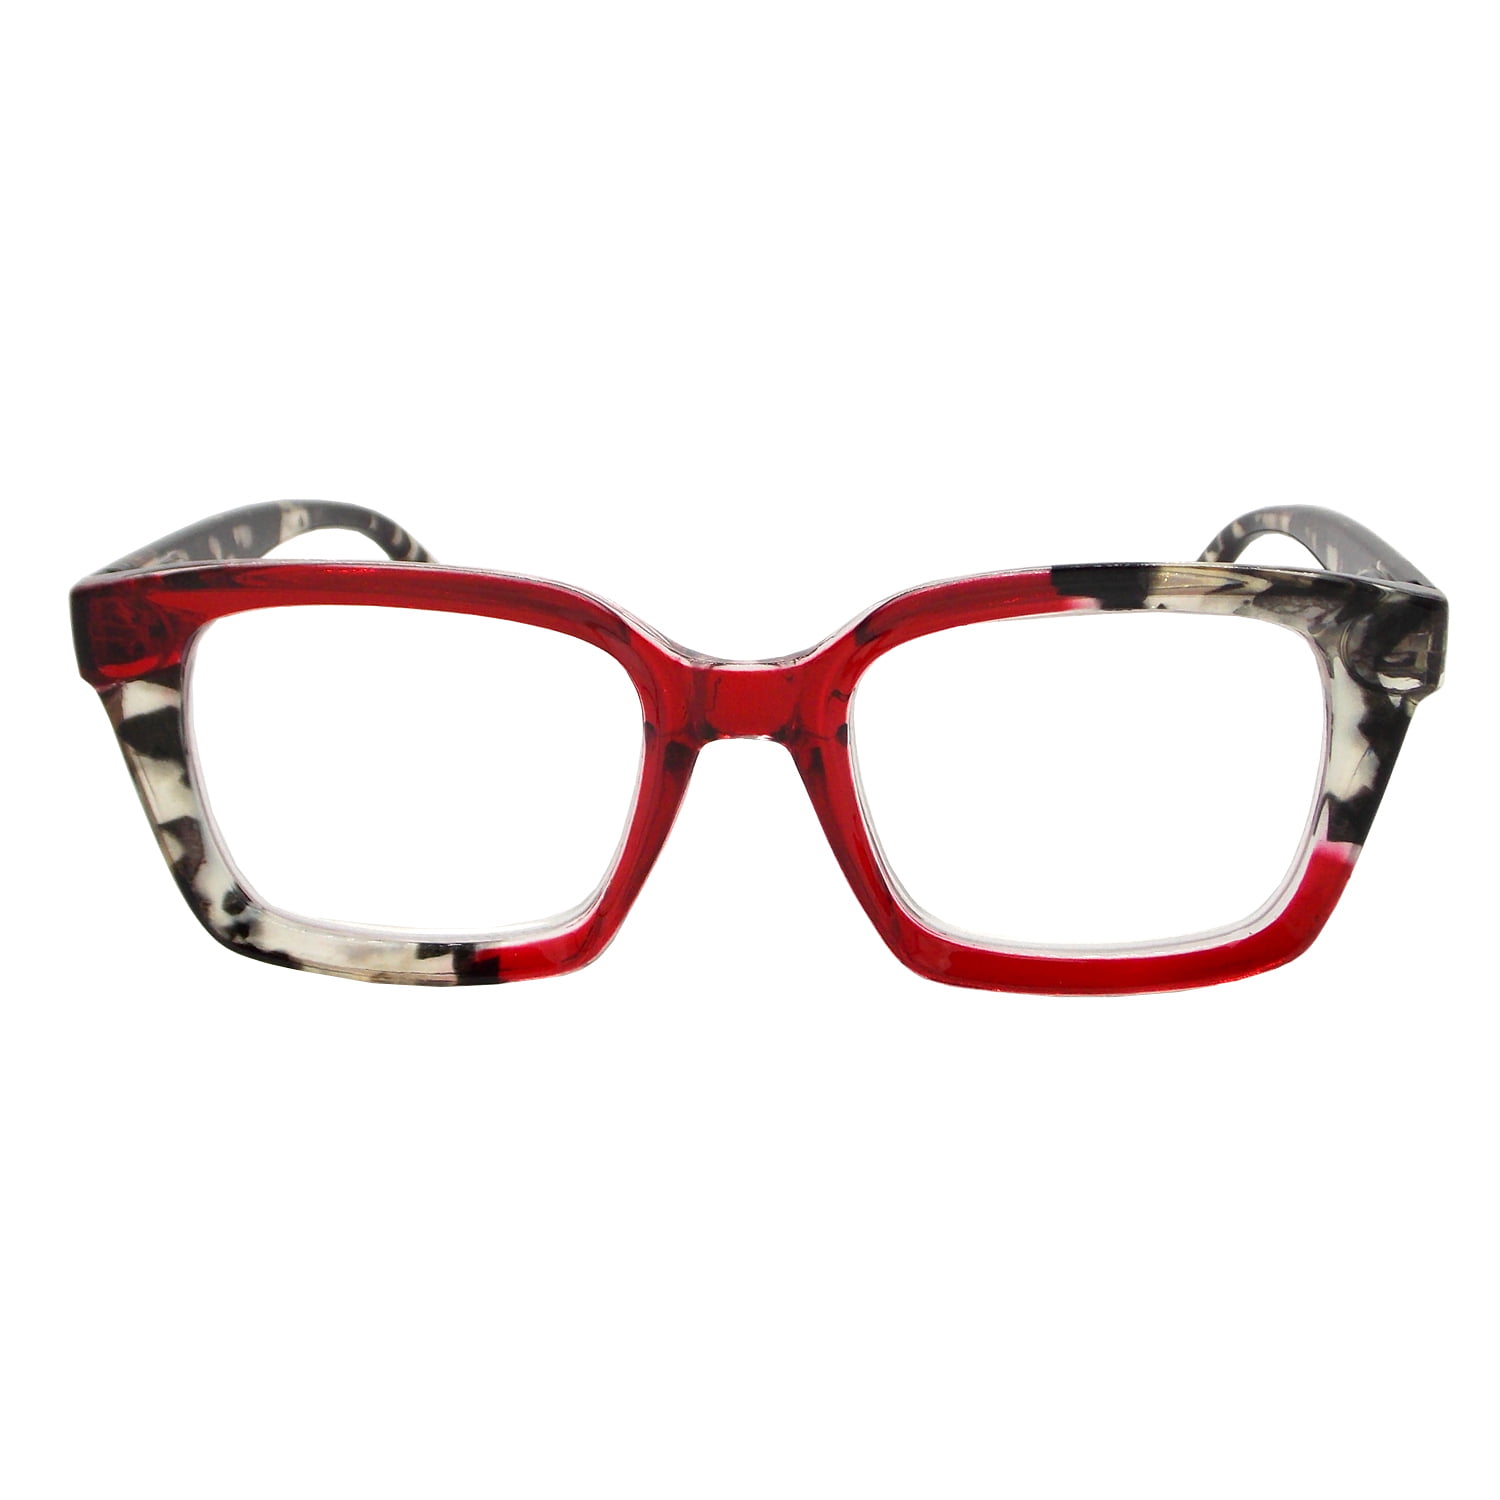 Elton John Eyewear Pop Spec Collection Turquoise Remix Readers +1.25